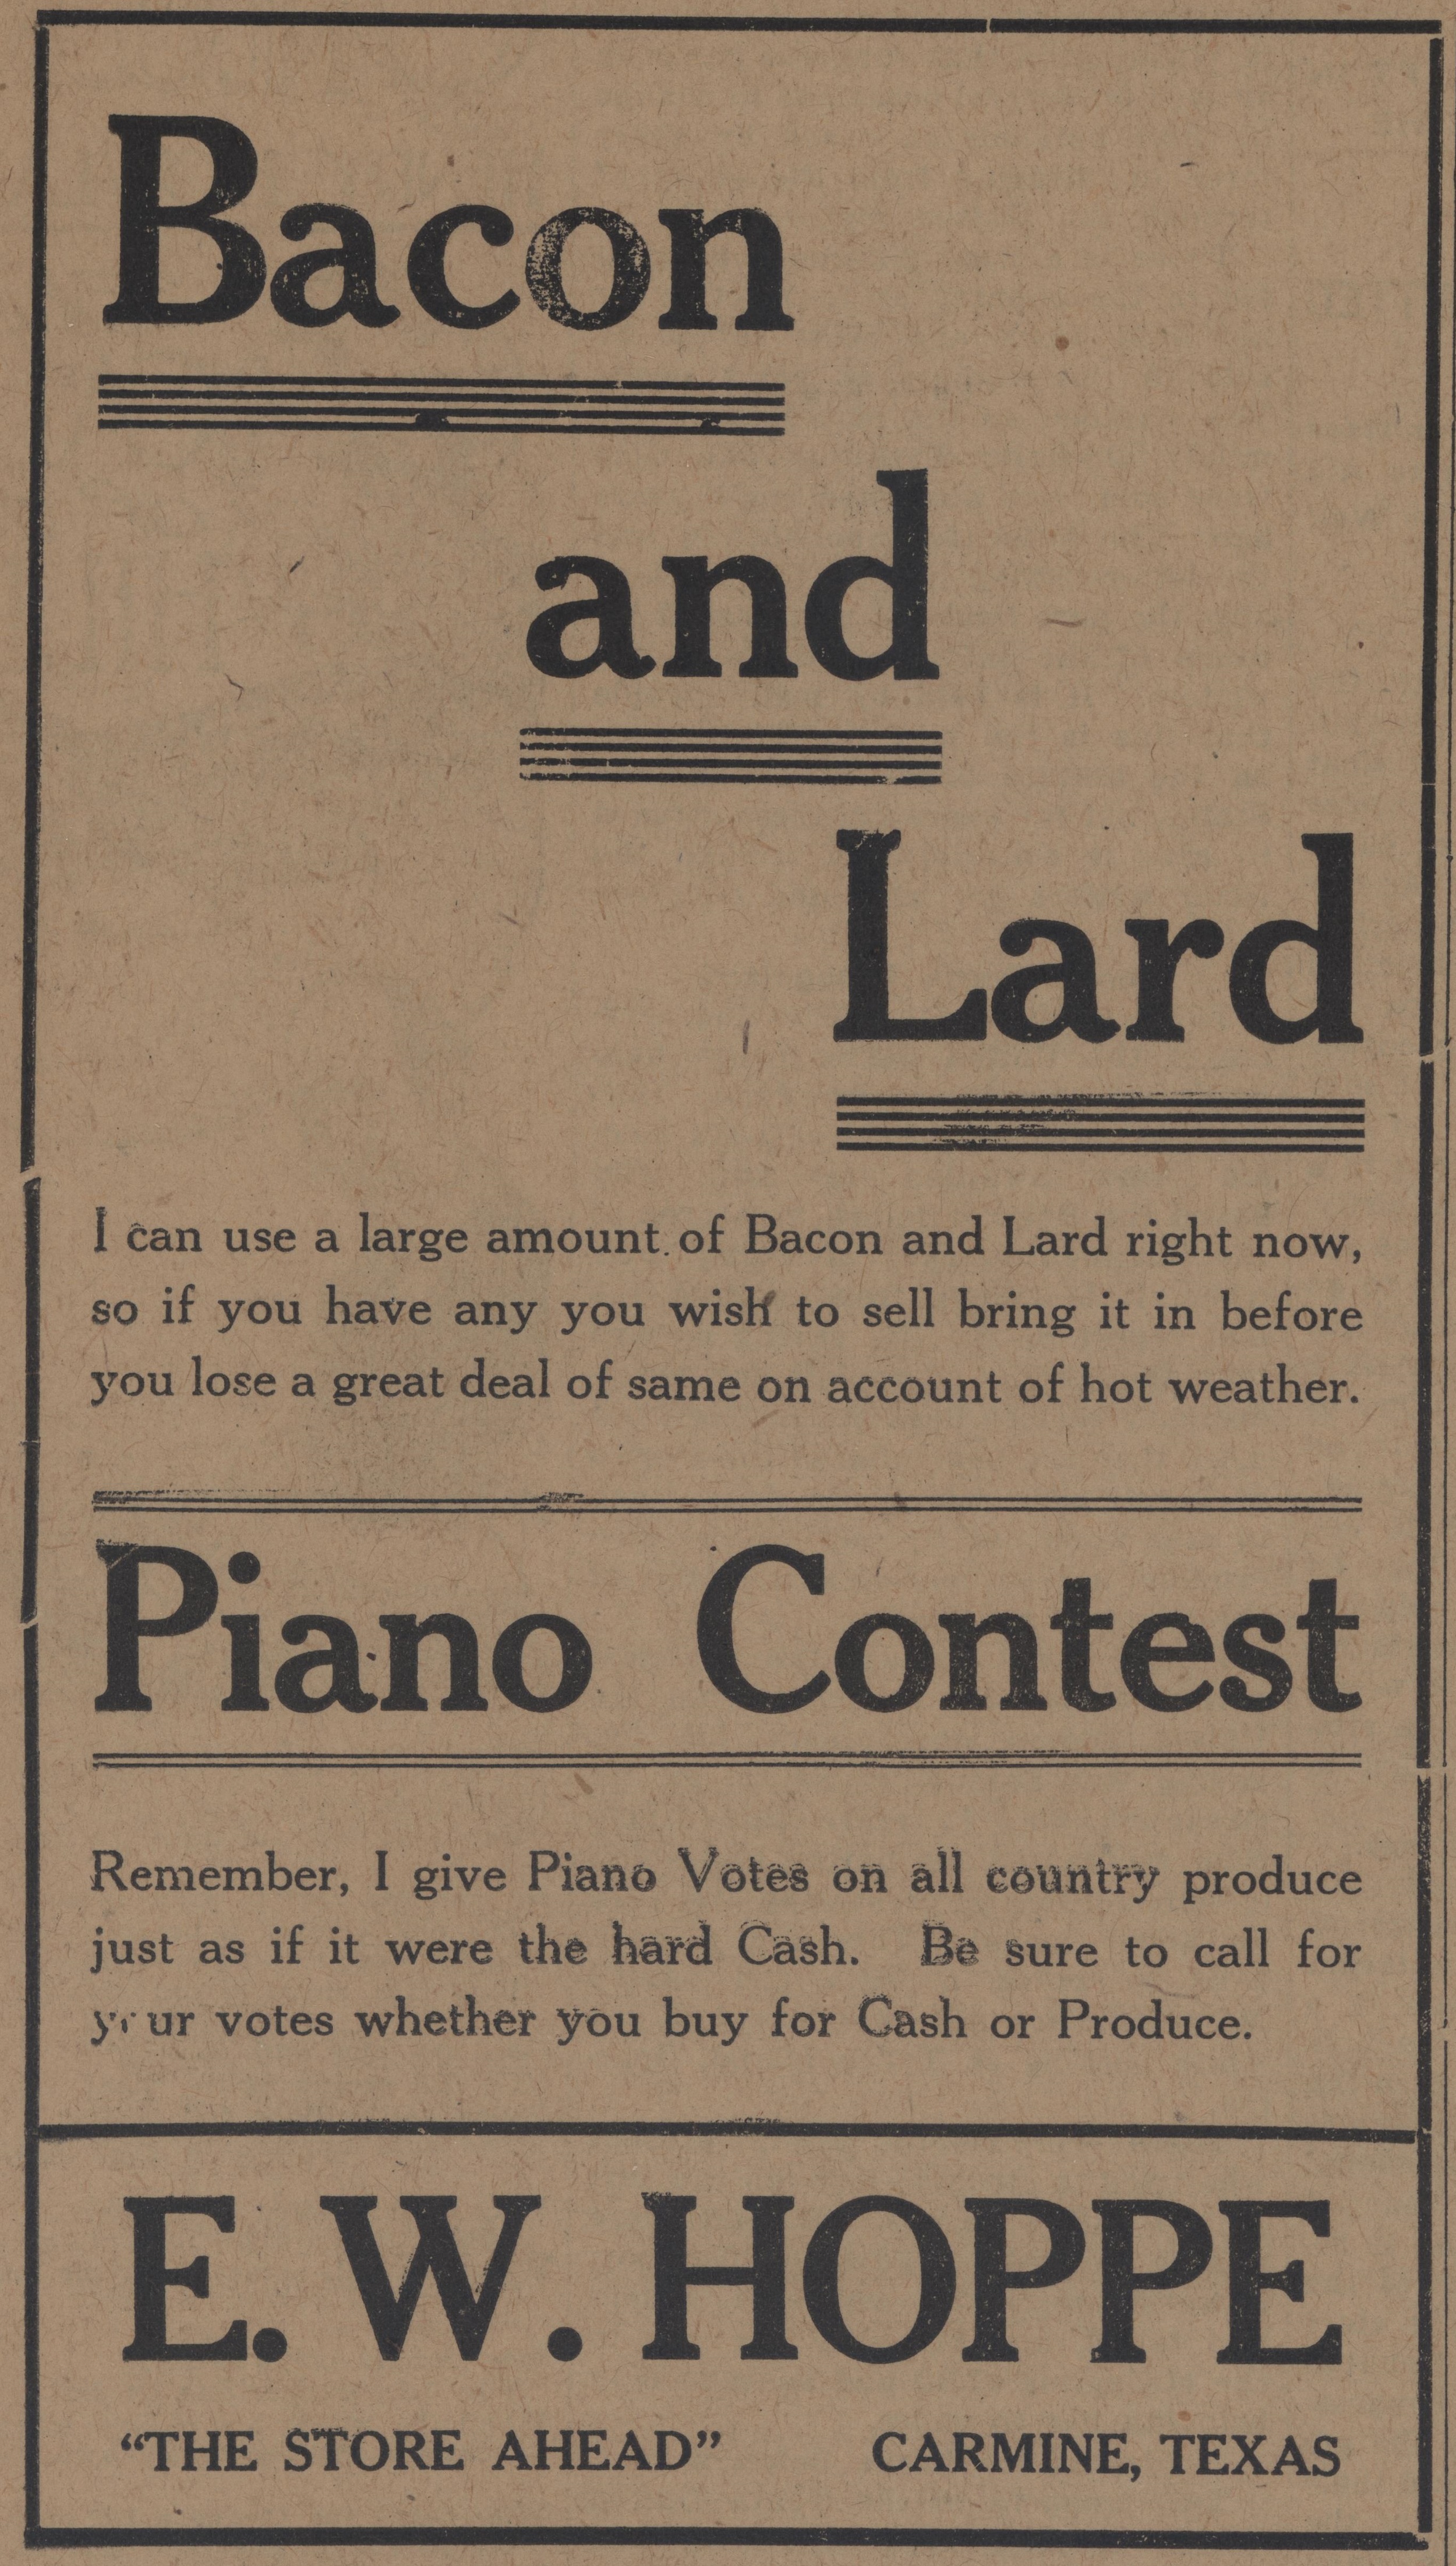 Advertisement, 1913